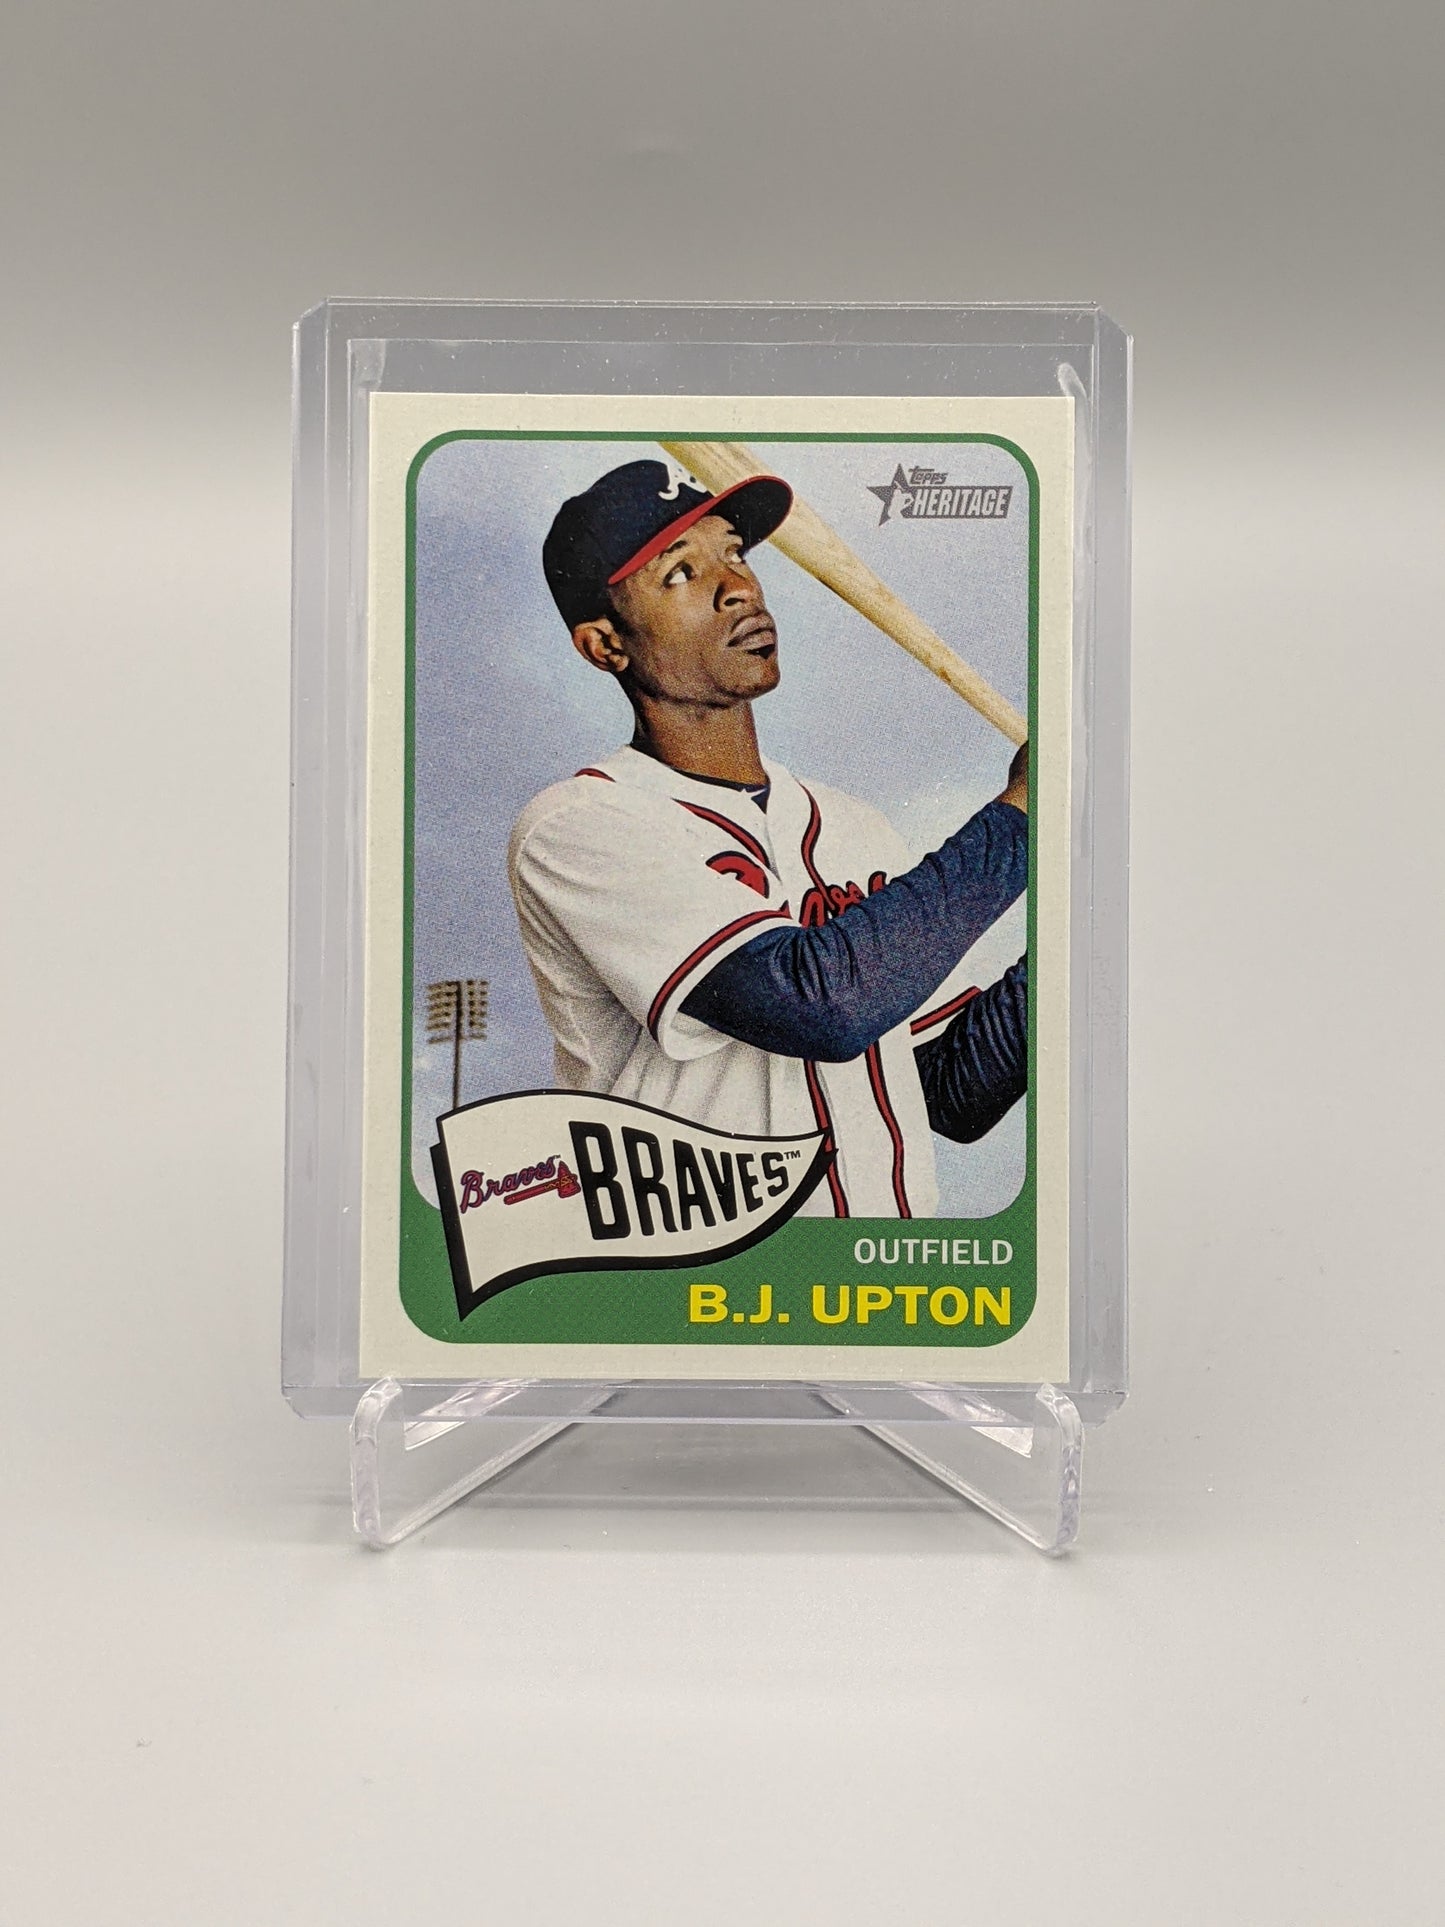 2014 Topps Heritage SP #484 B.J. Upton Braves